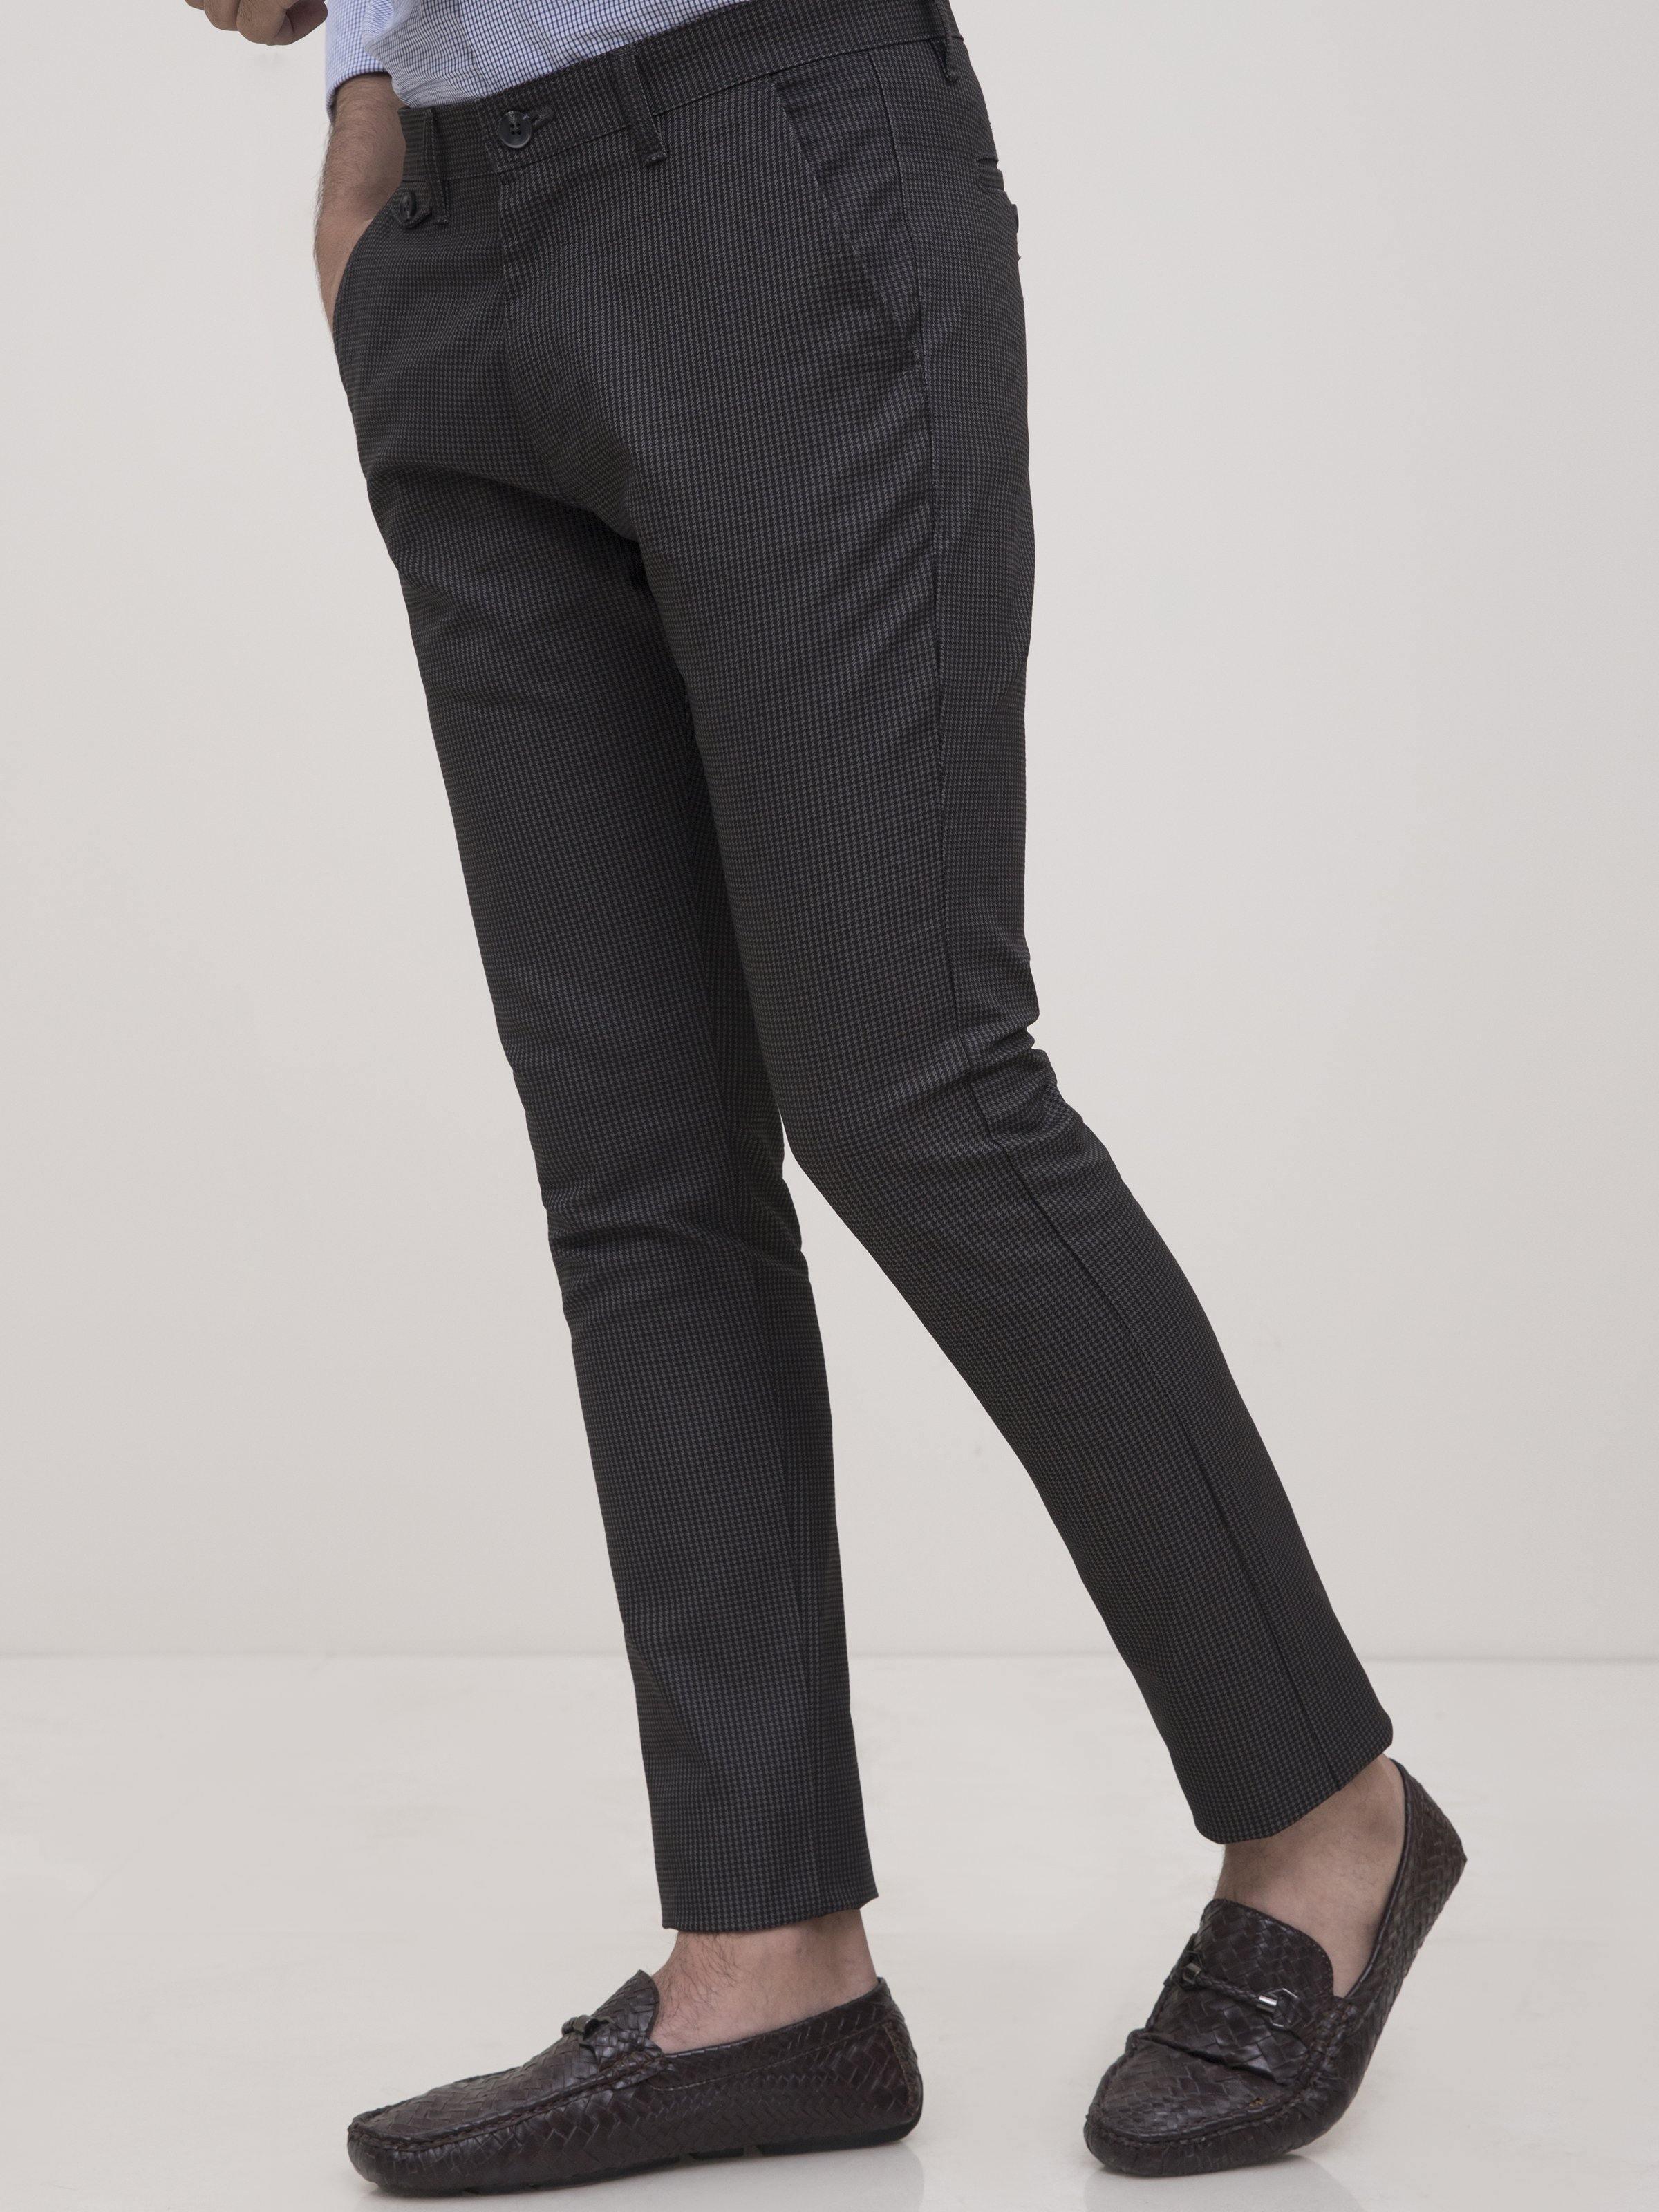 CASUAL PANT CROSS POCKET SLIM FIT BLACK GREY at Charcoal Clothing